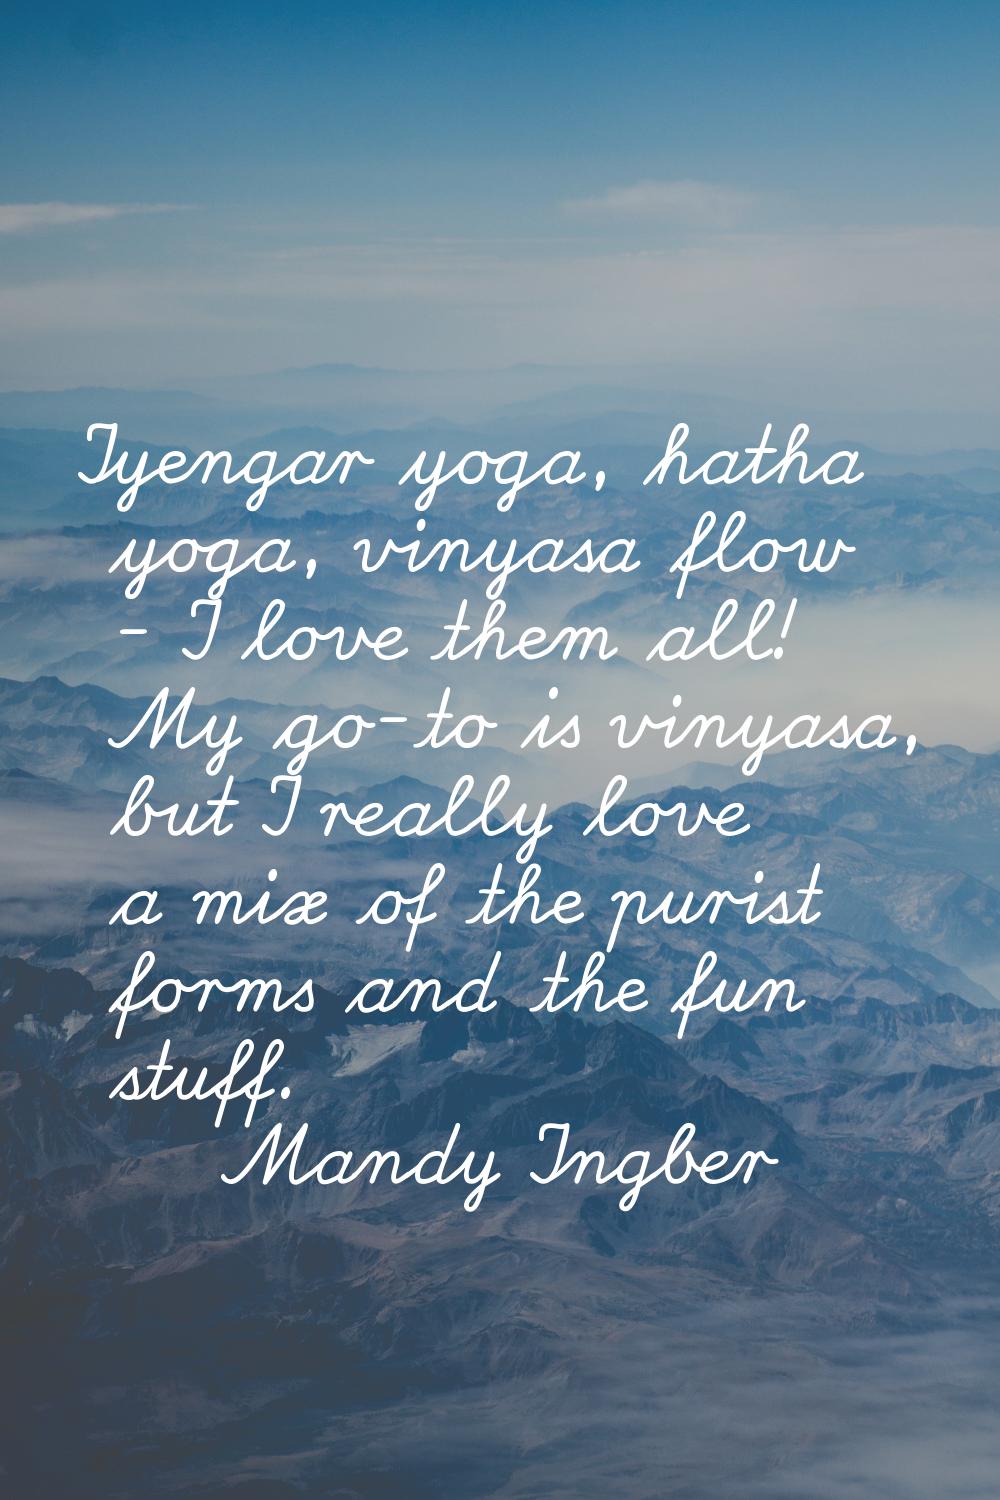 Iyengar yoga, hatha yoga, vinyasa flow - I love them all! My go-to is vinyasa, but I really love a 